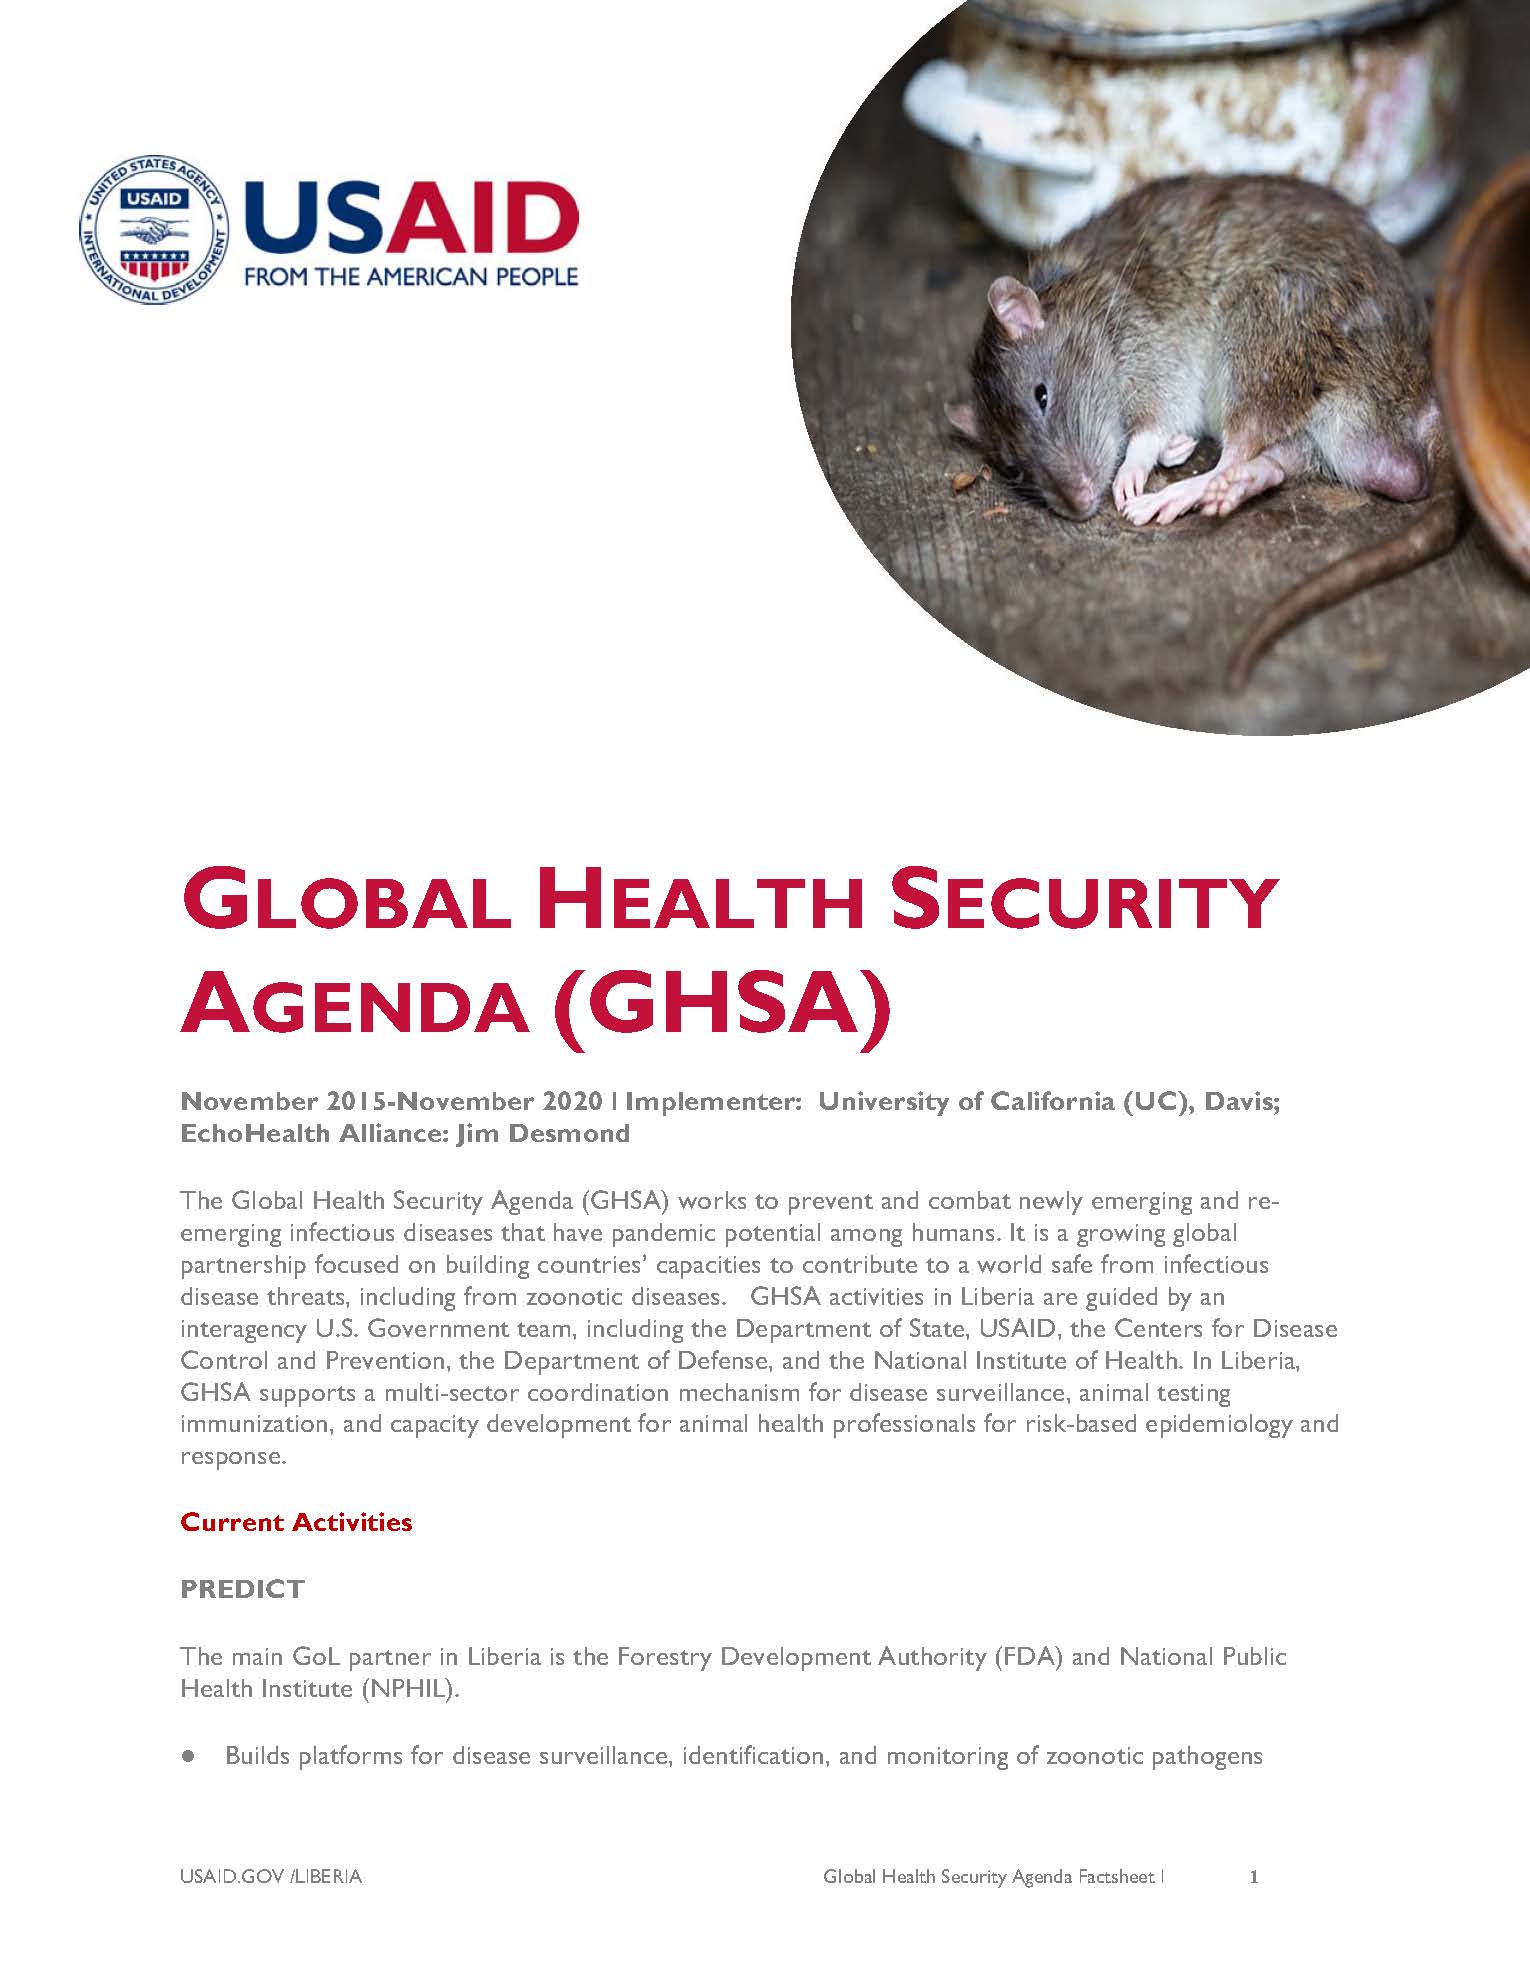 Global Health Security Agenda Program